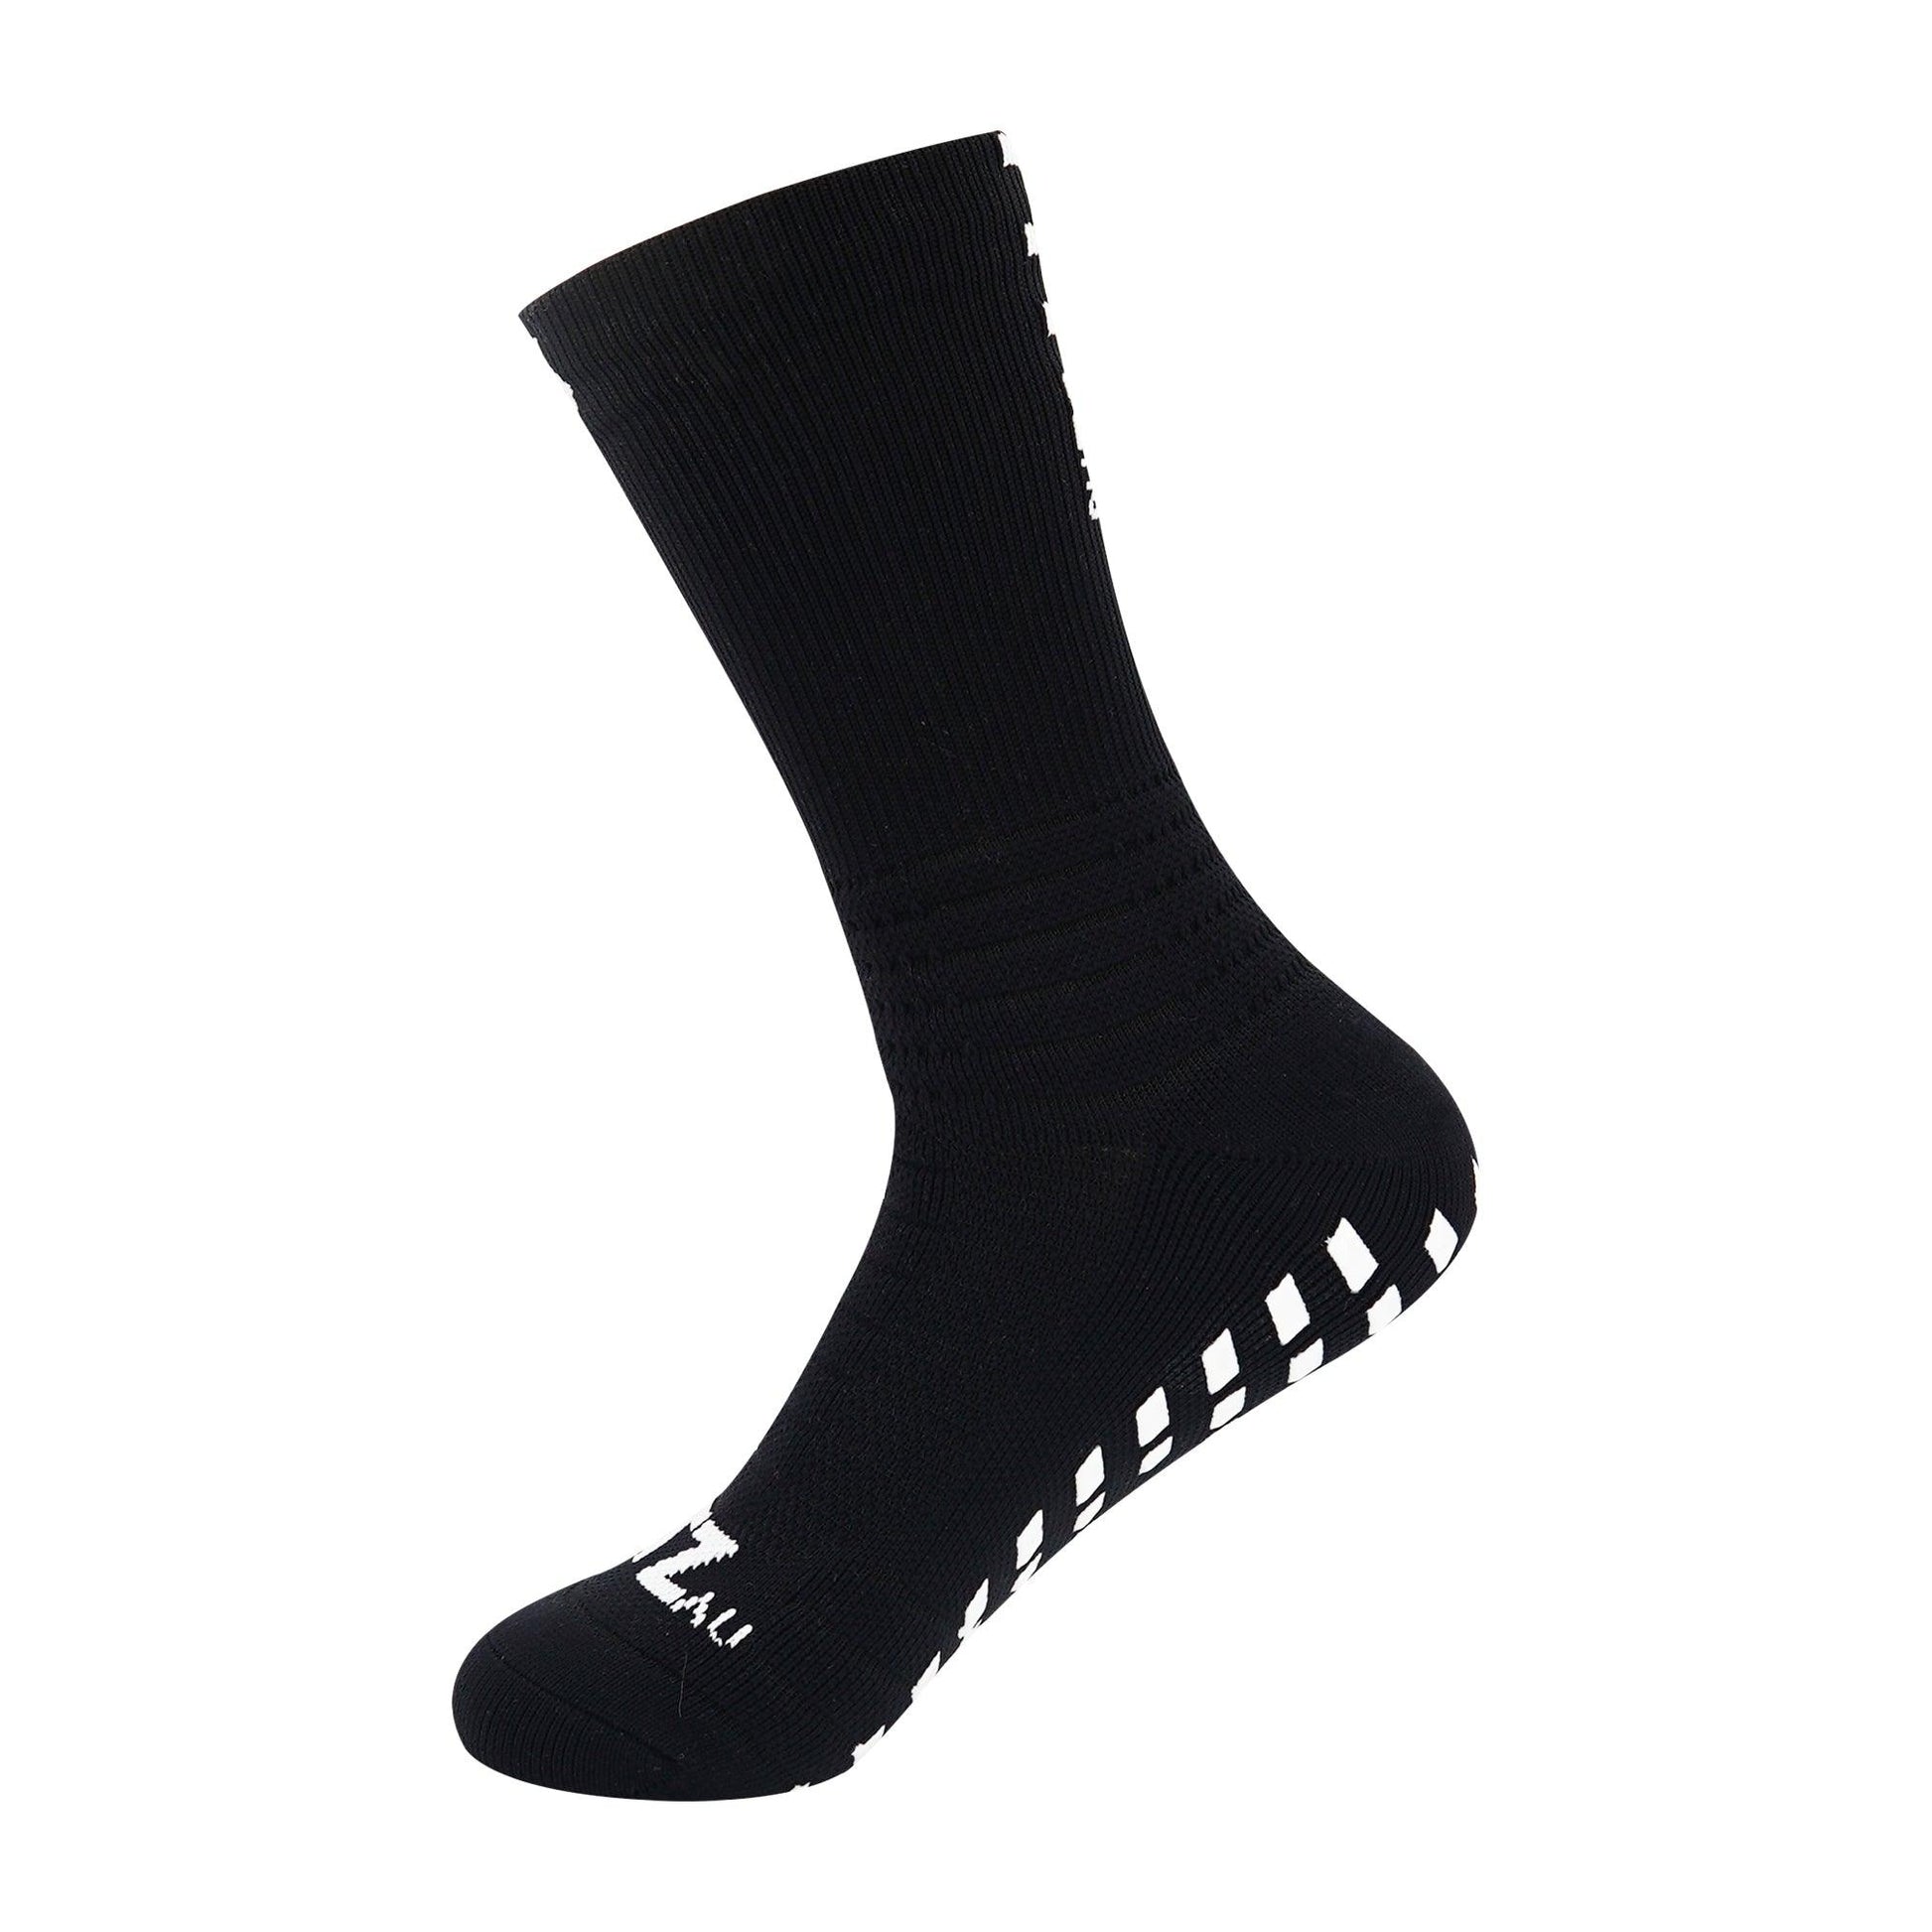 Supreme Grip Socks 2 Pack – FITZ AUSTRALIA